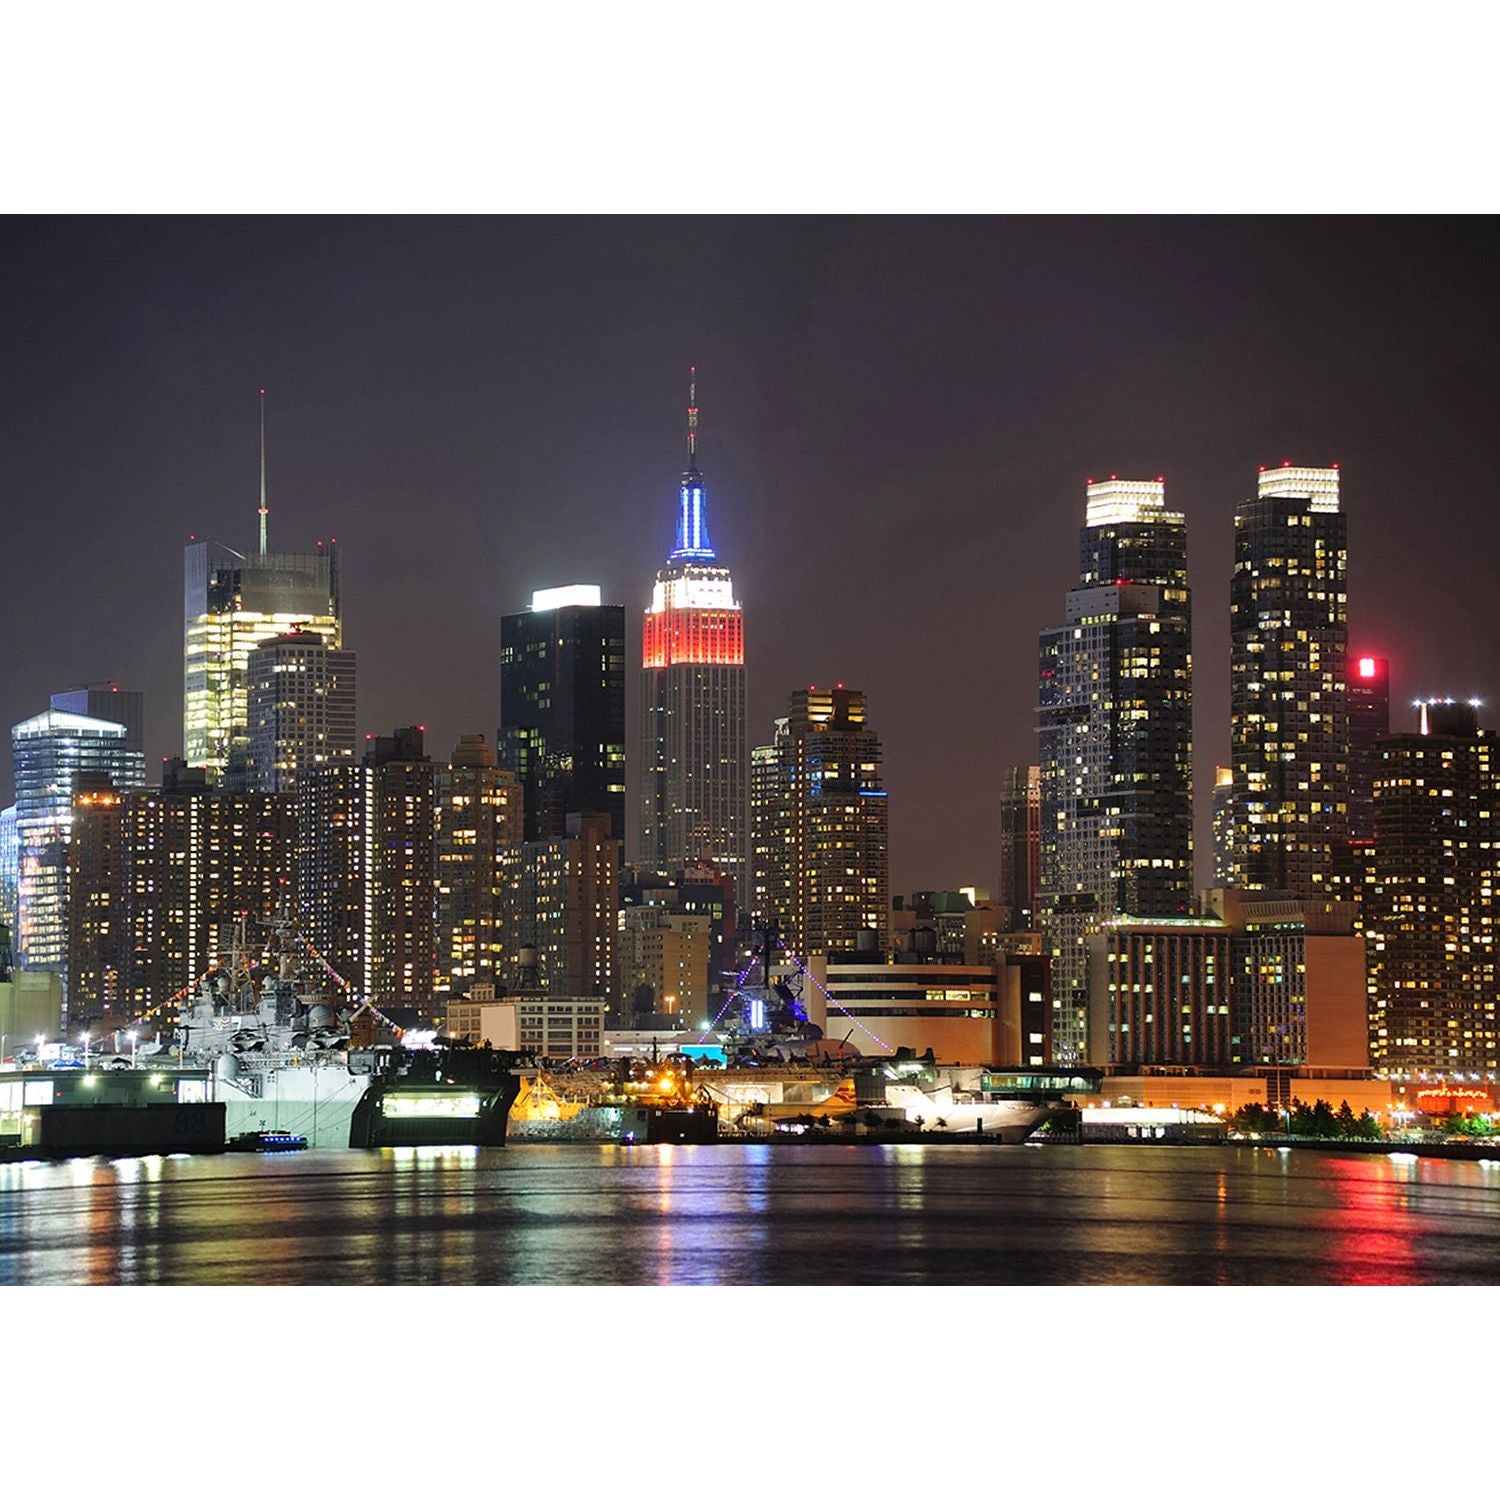 City Lights Majesty: New York Skyline at Night Wall Mural